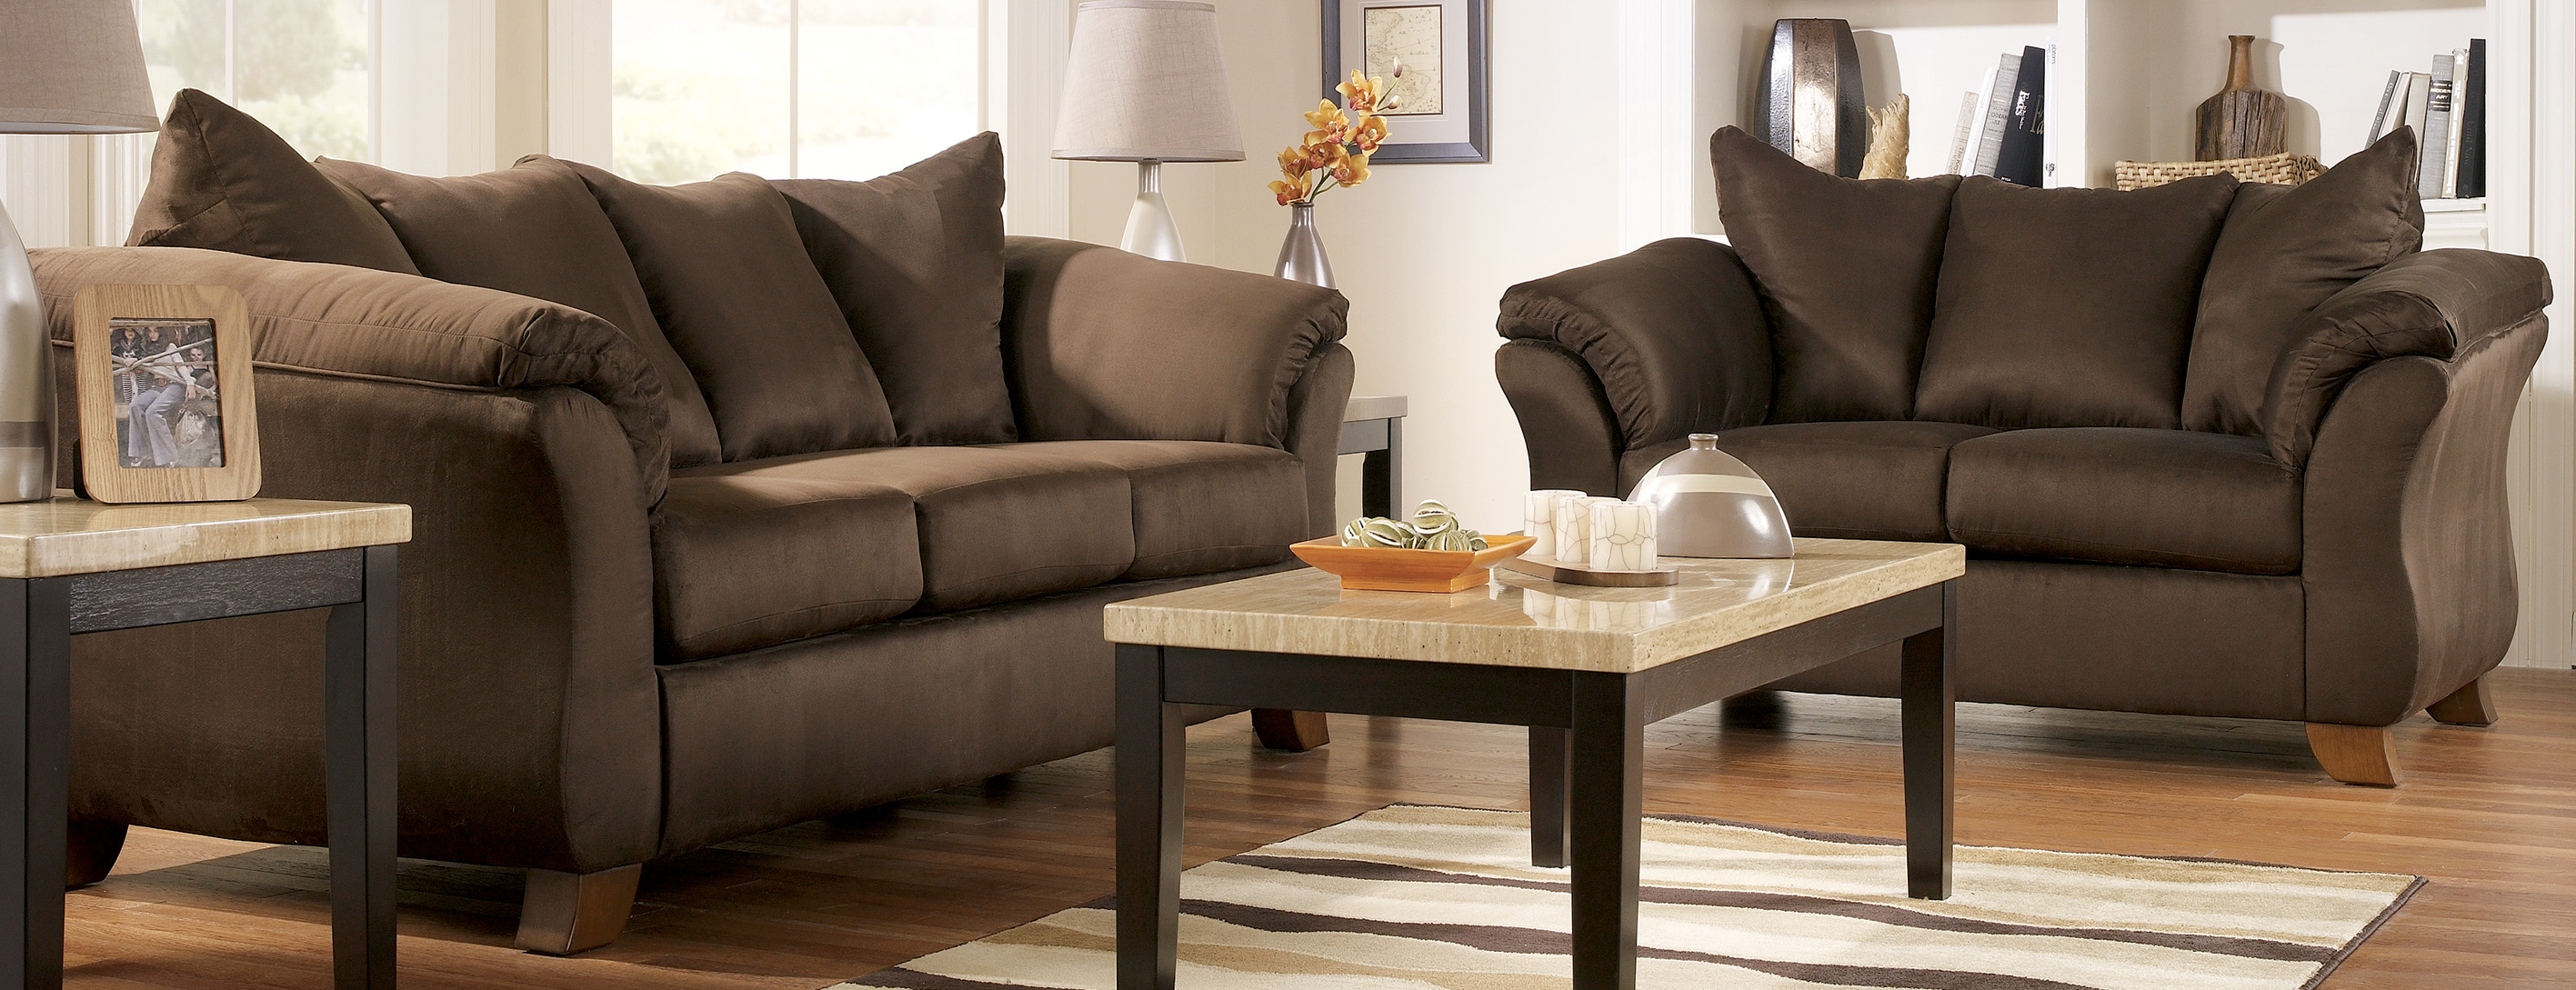 Living Room Furniture , HD Wallpaper & Backgrounds